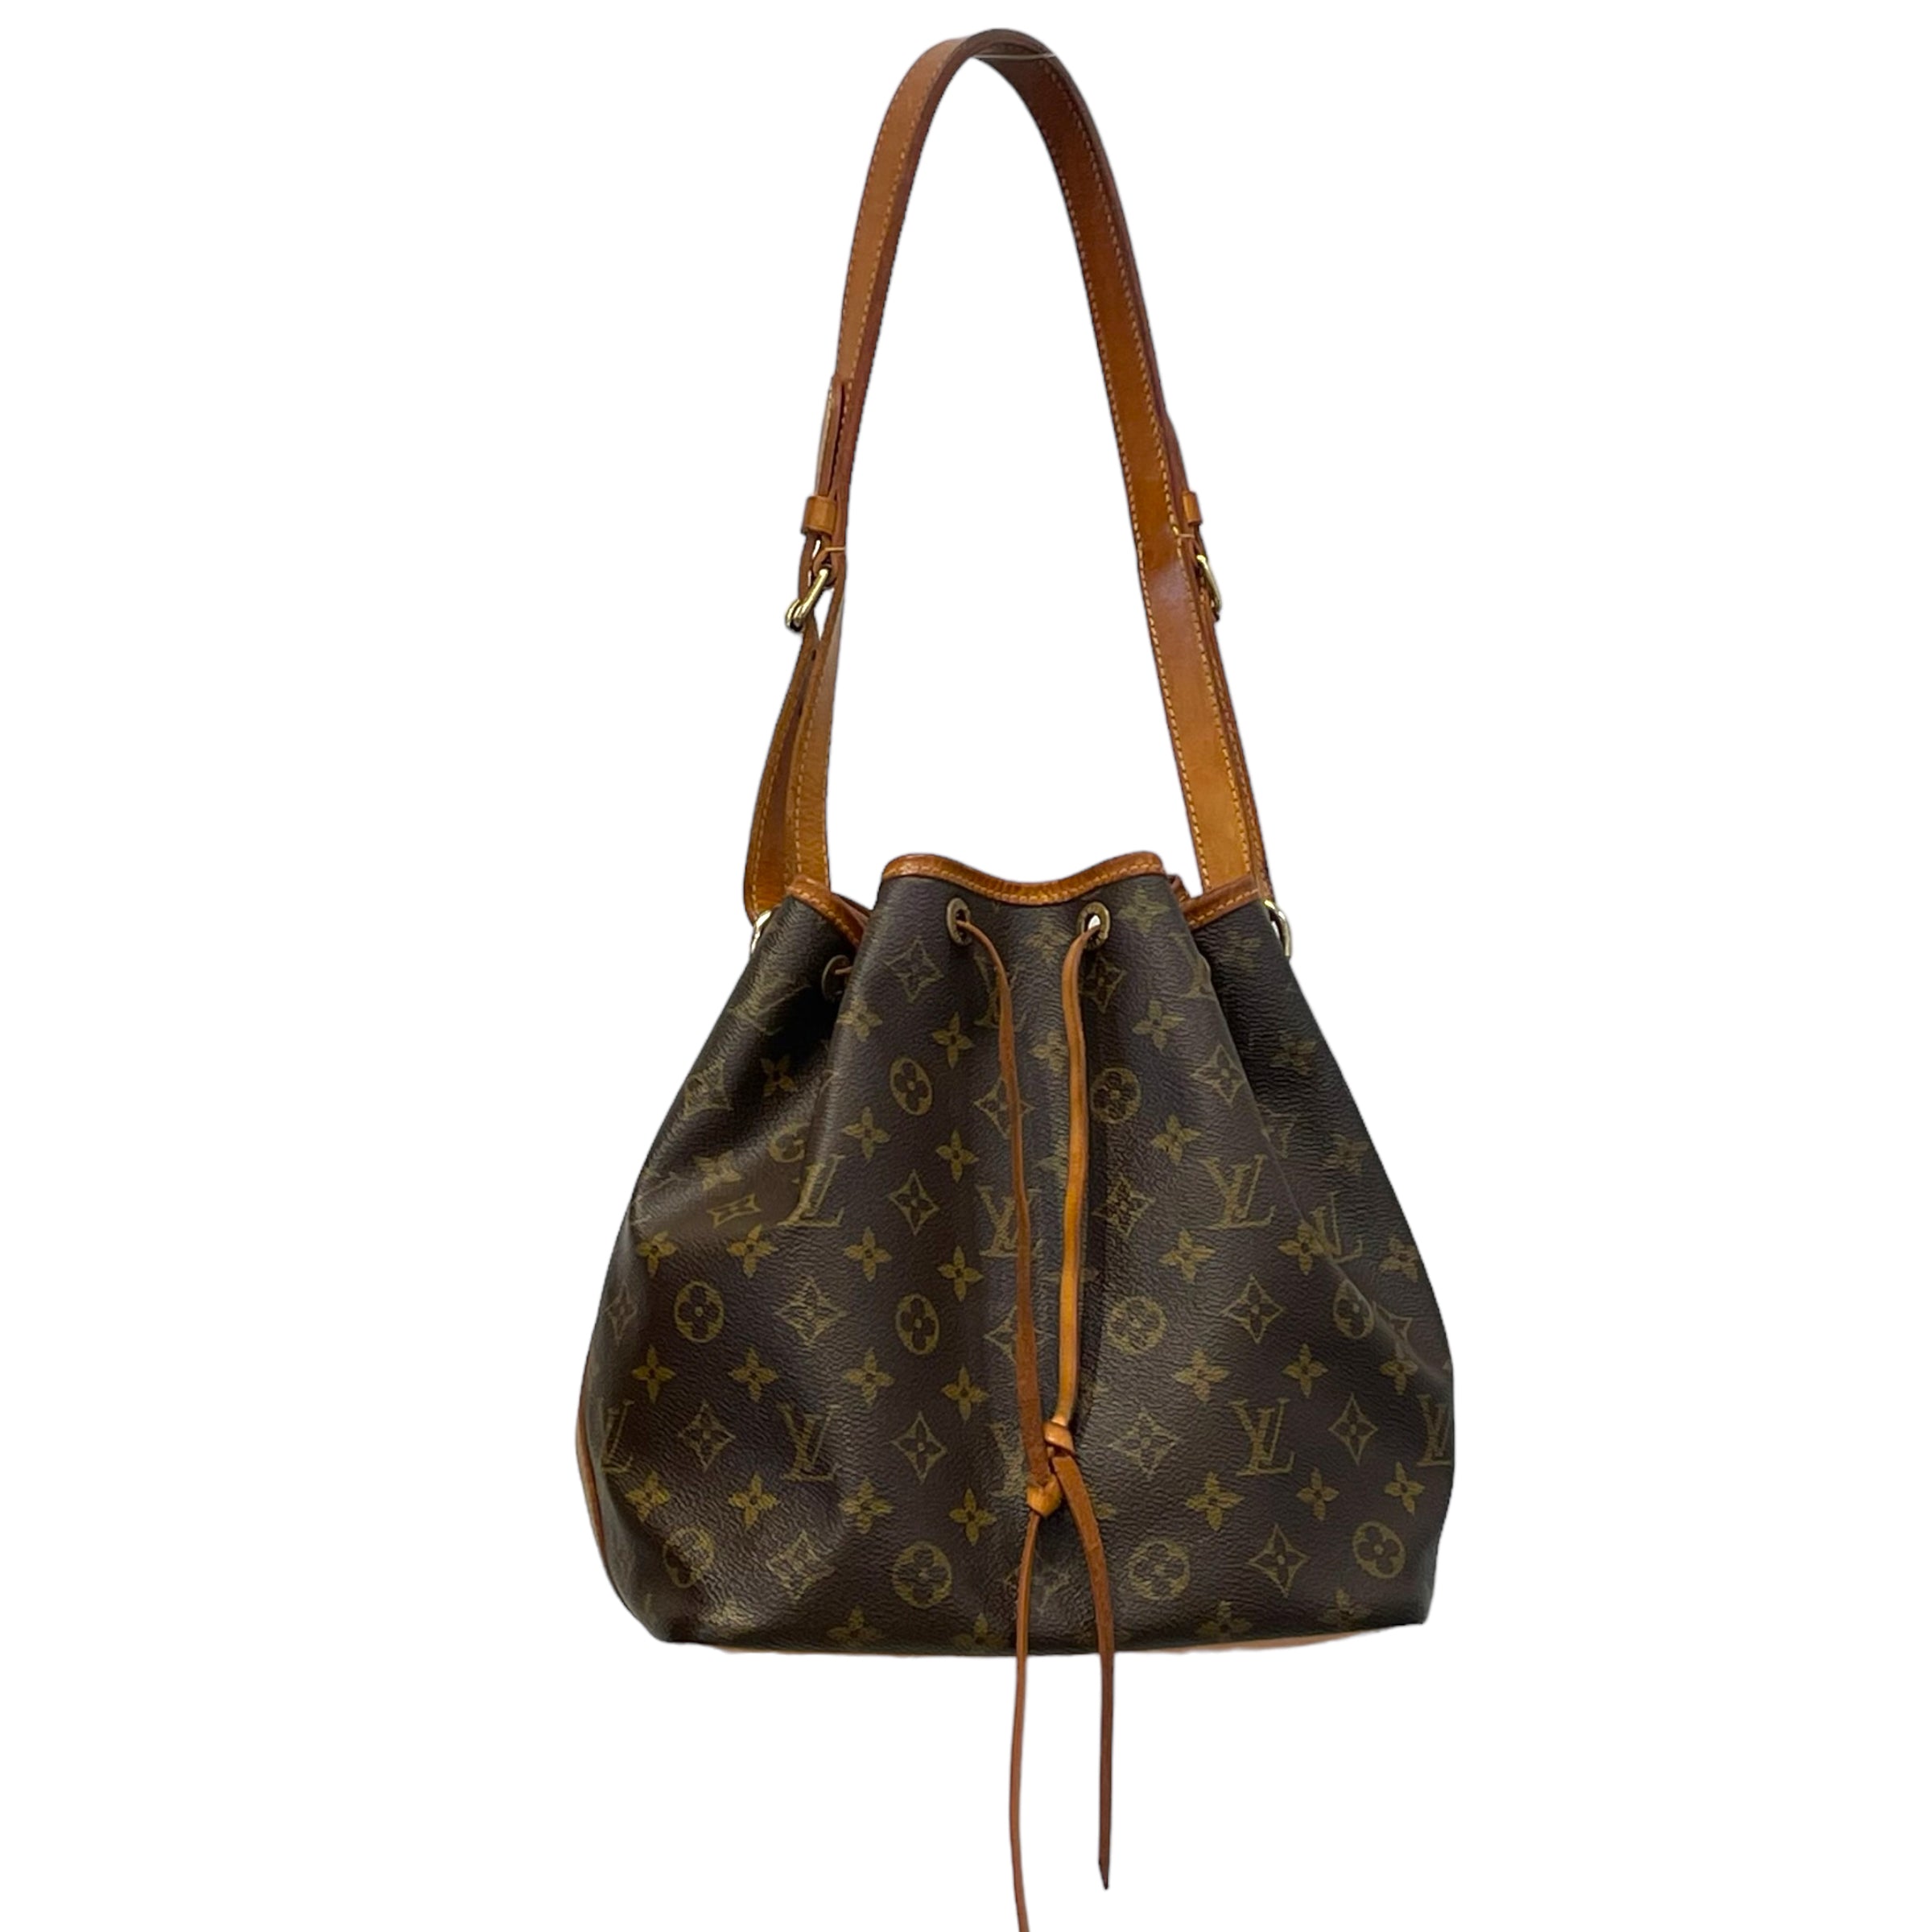 Japan Used Bag] Used Louis Vuitton Speedy 30 Monogram Brw/Leather/Brw Bag